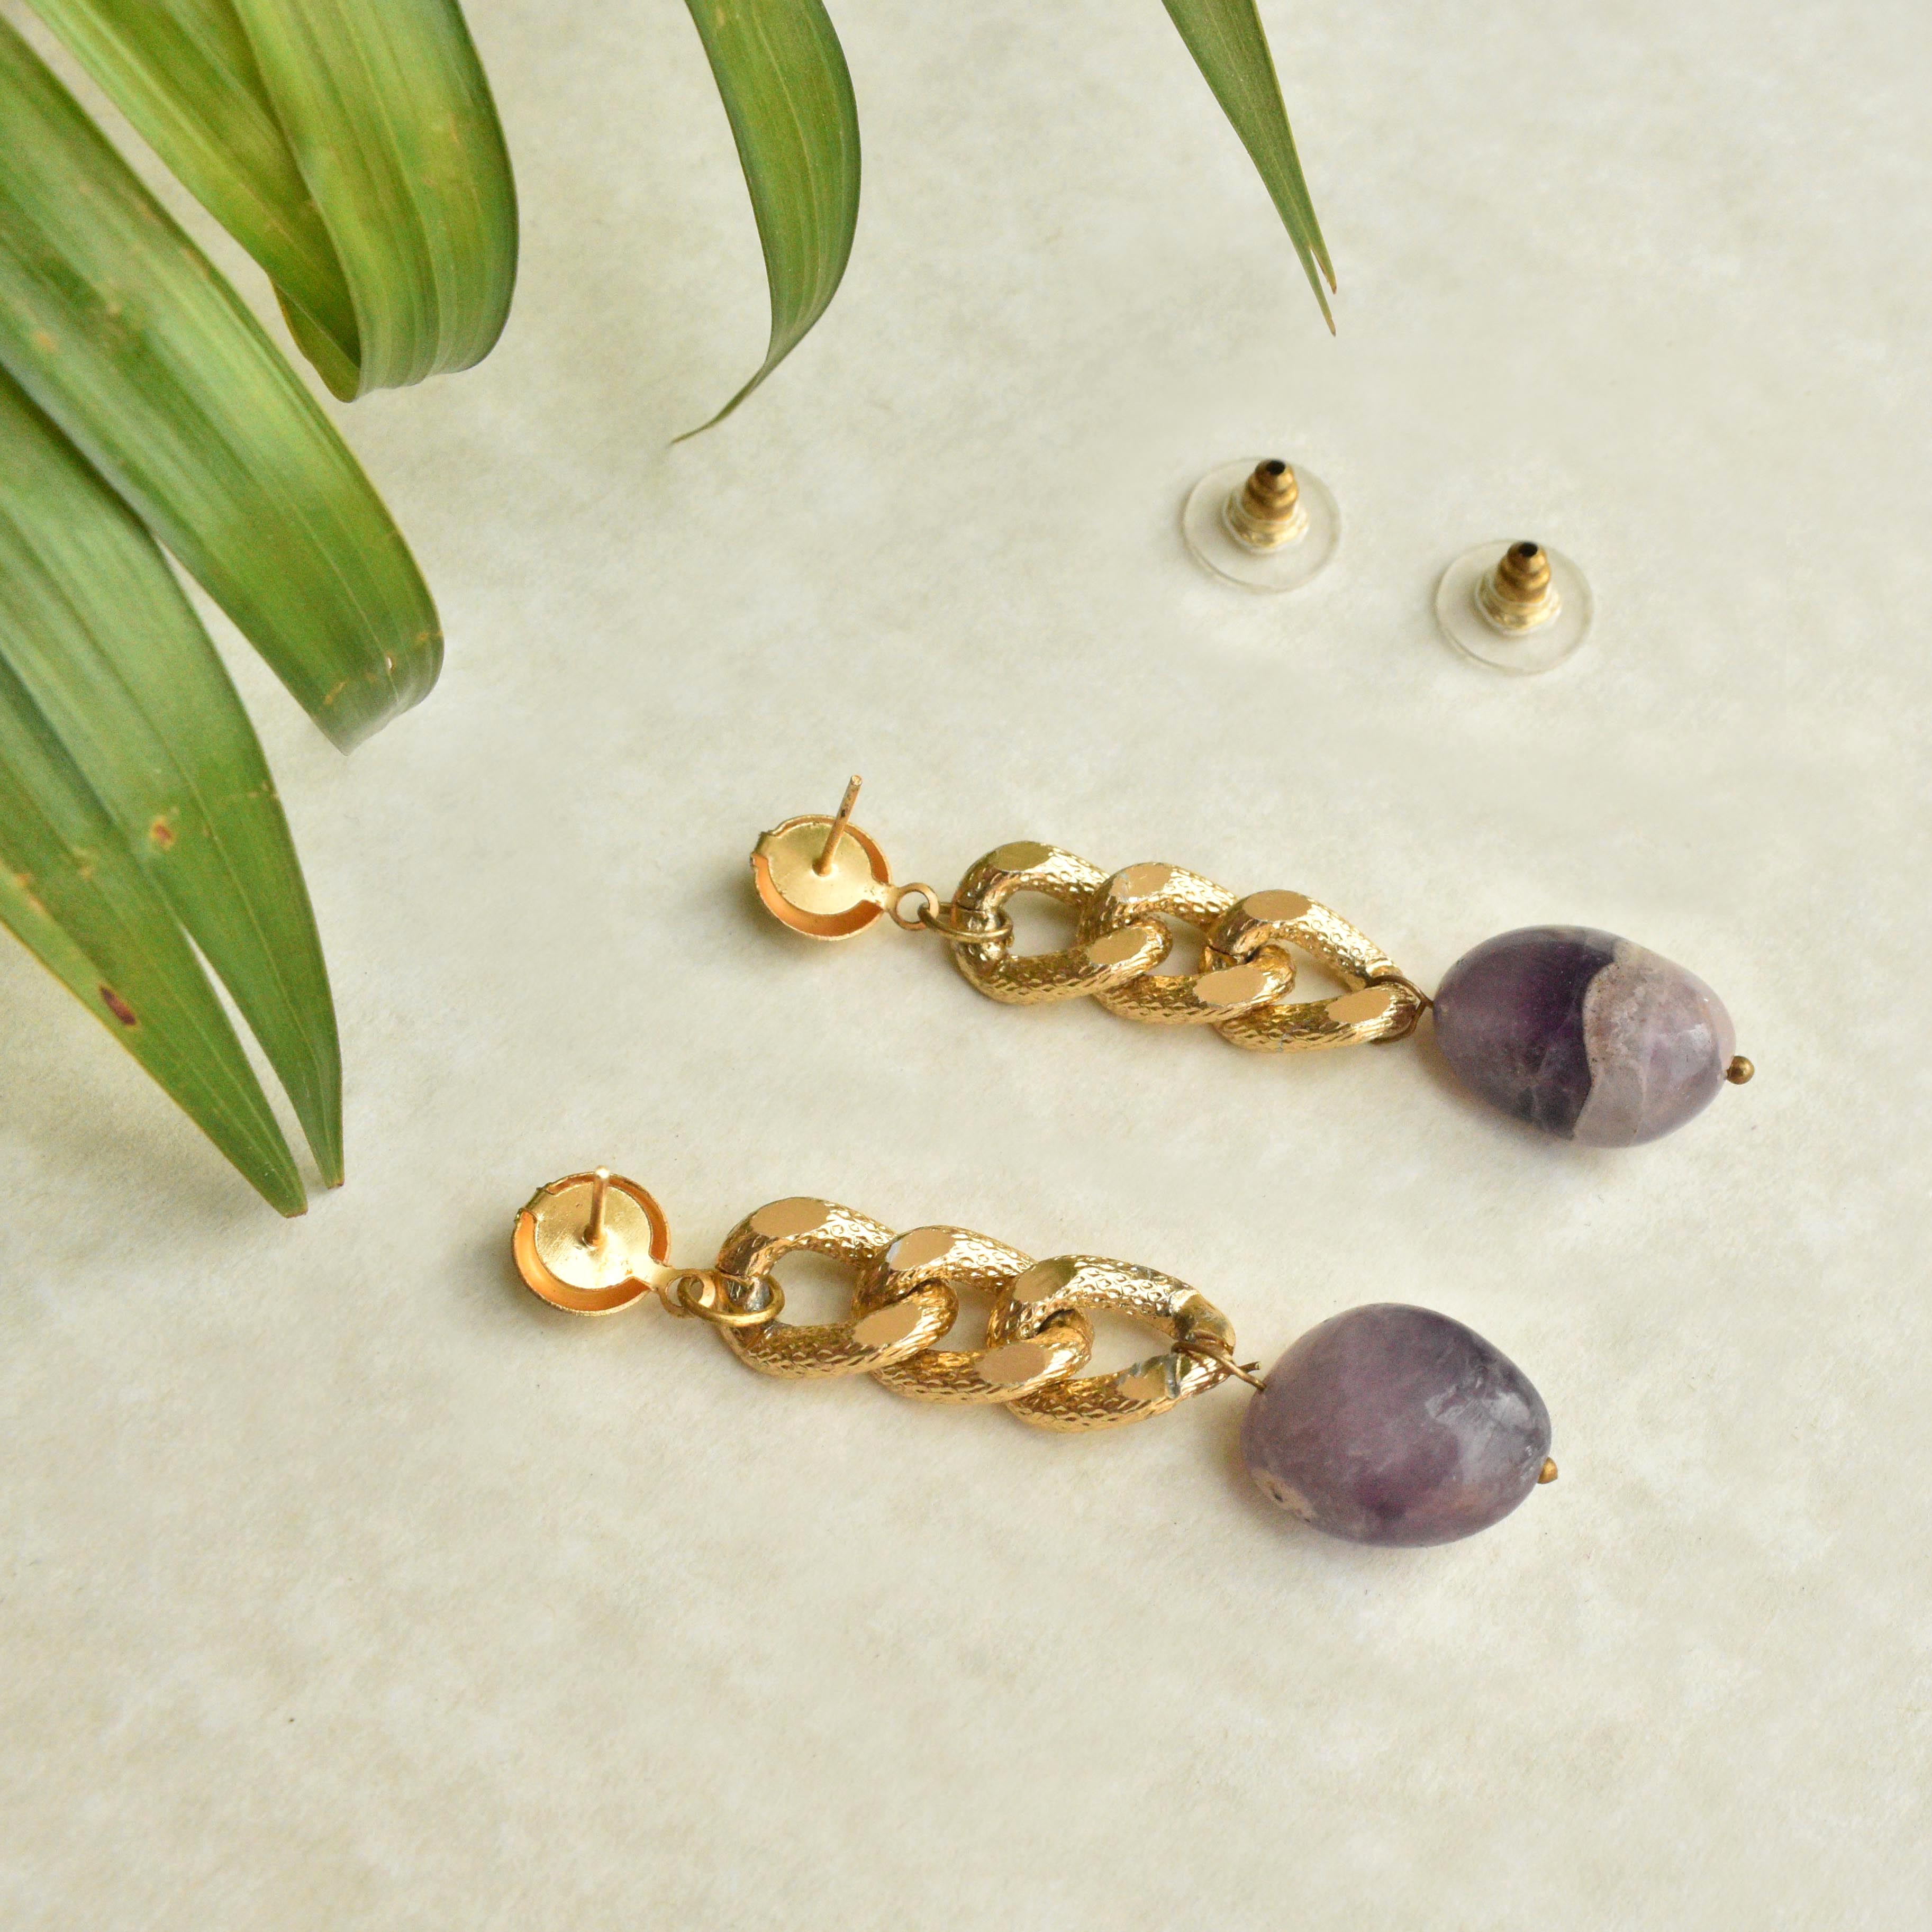 glass beads earrings